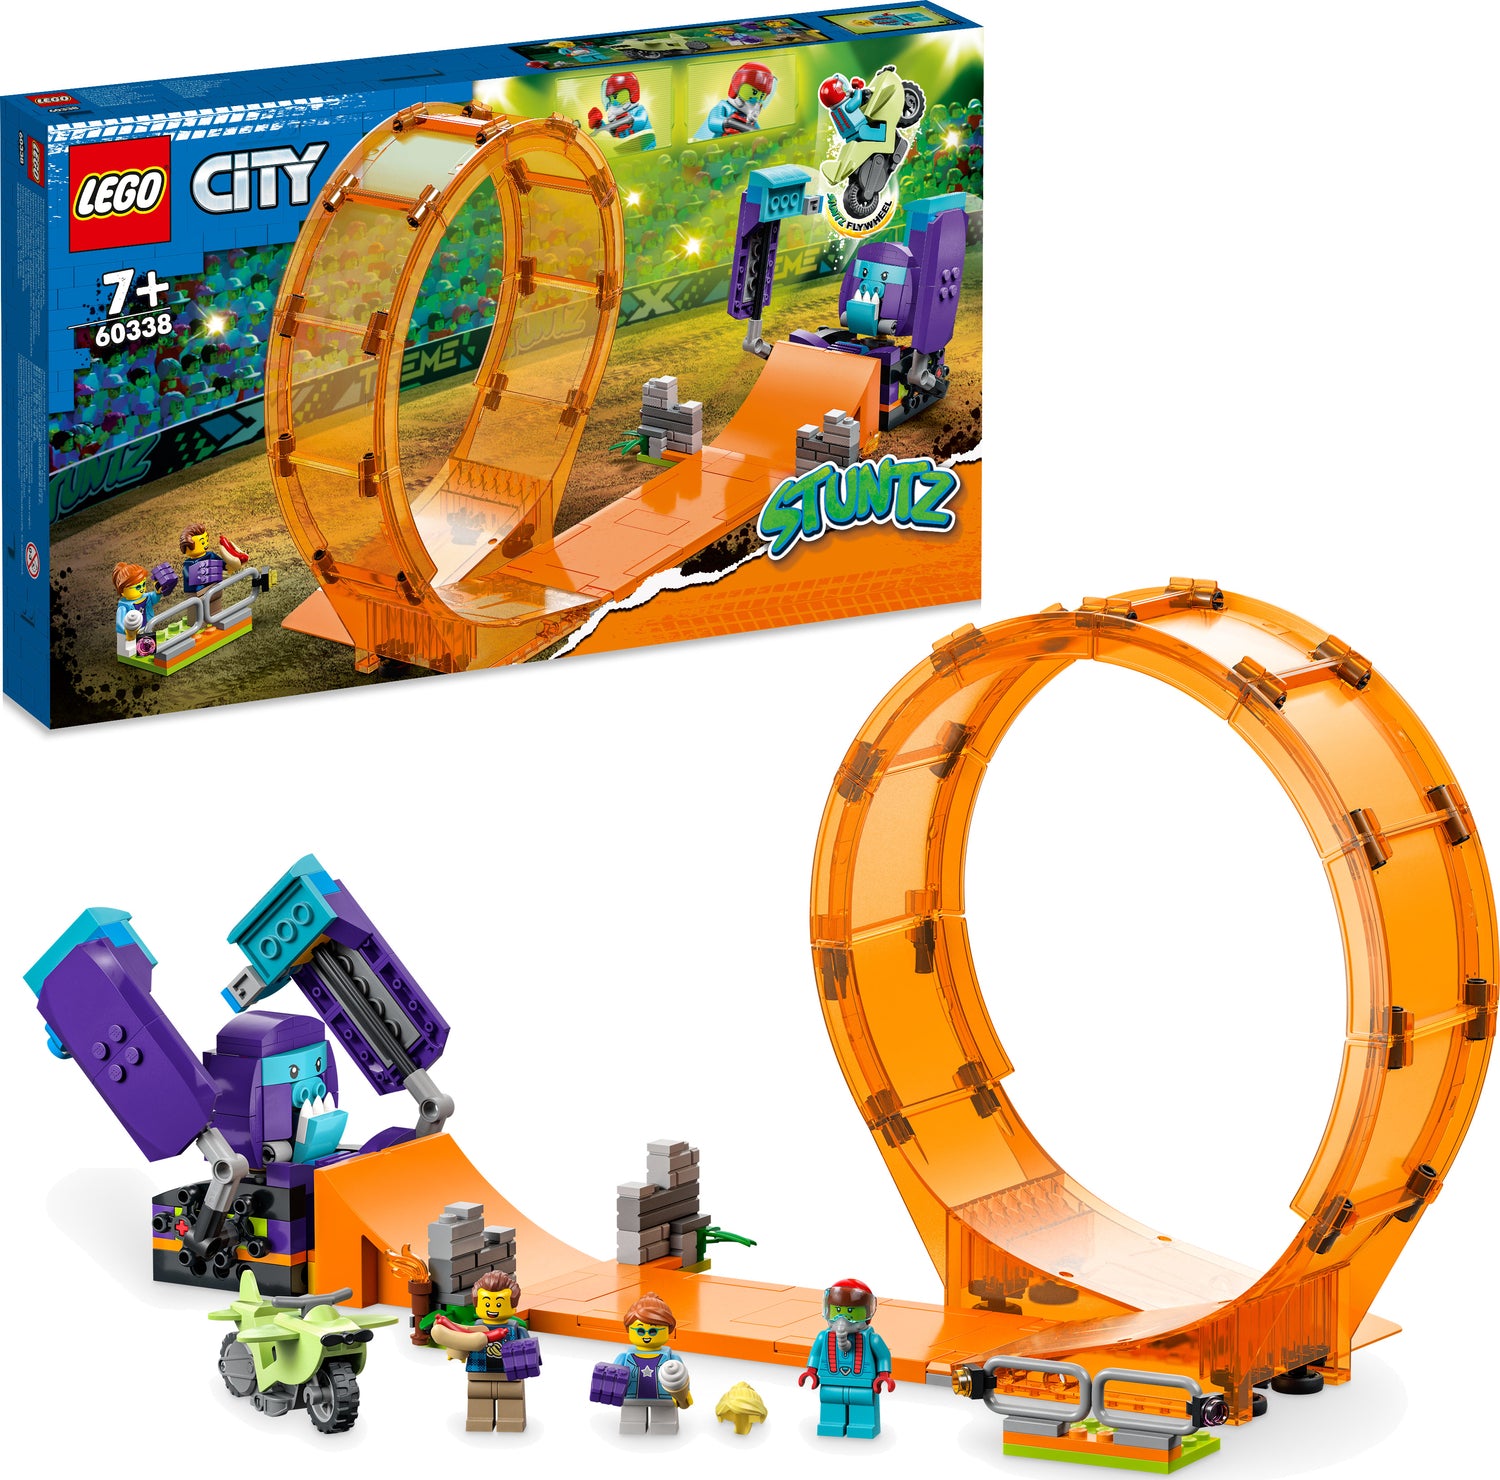 LEGO® City Stuntz The Knockdown Stunt Challenge - Fun Stuff Toys